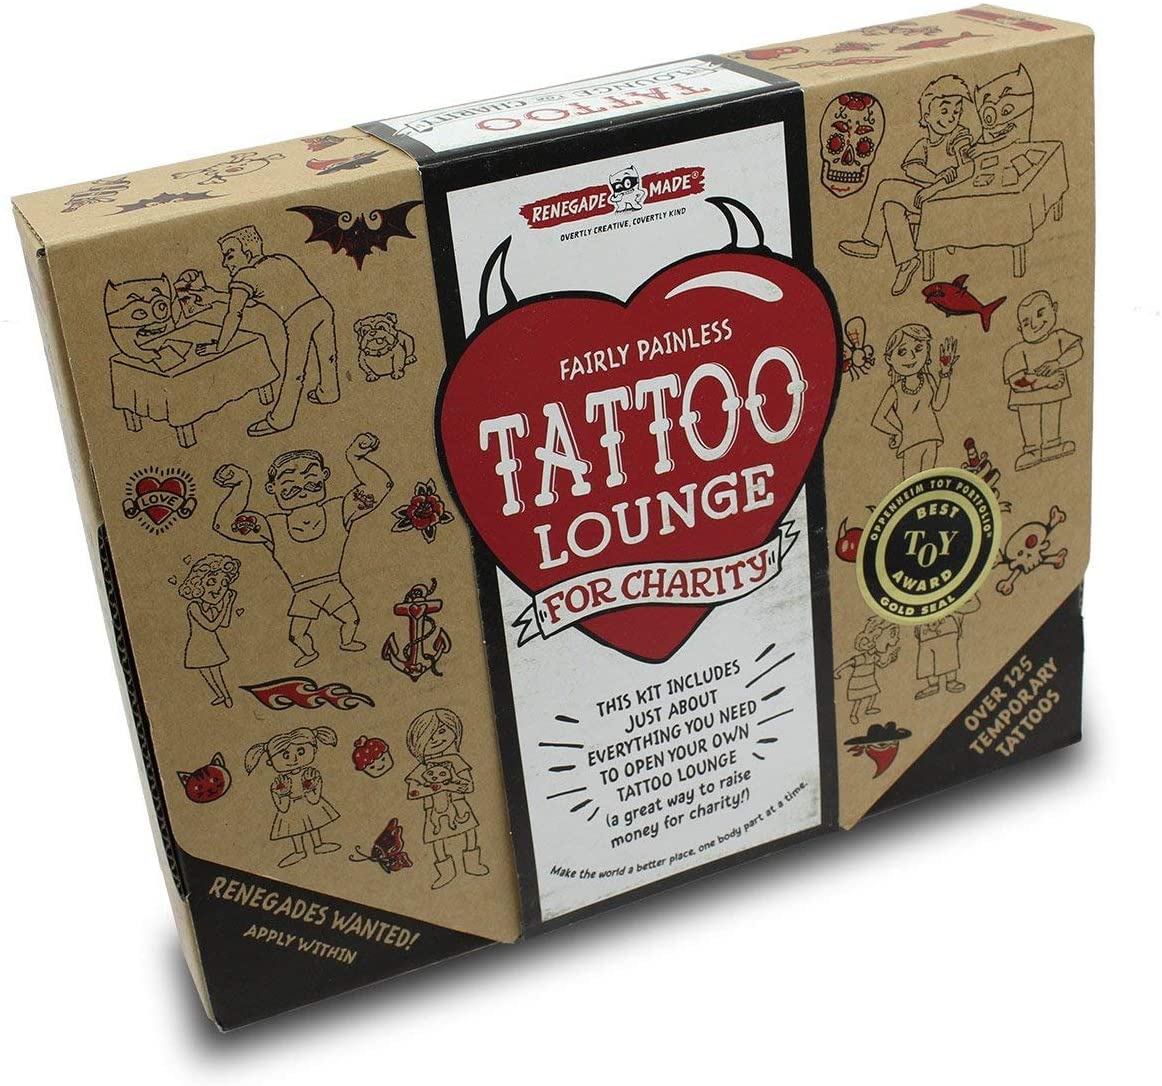 Fairly Painless Tattoo Lounge - SuperMom Headquarters